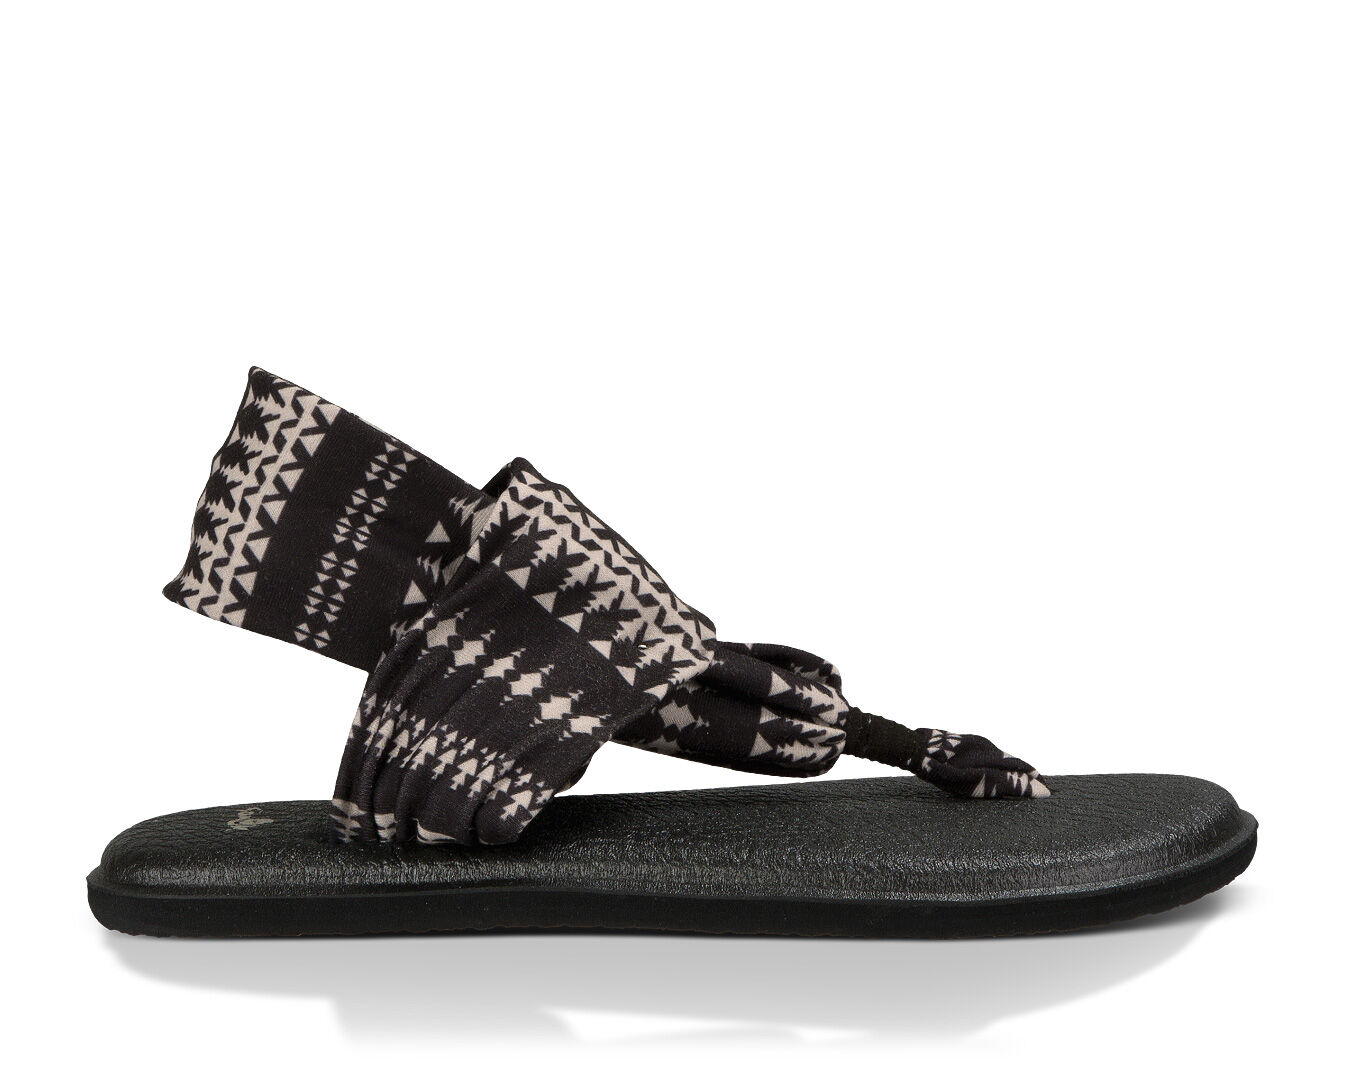 Sanuk Women's Yoga Sling 3 Knit Sandal